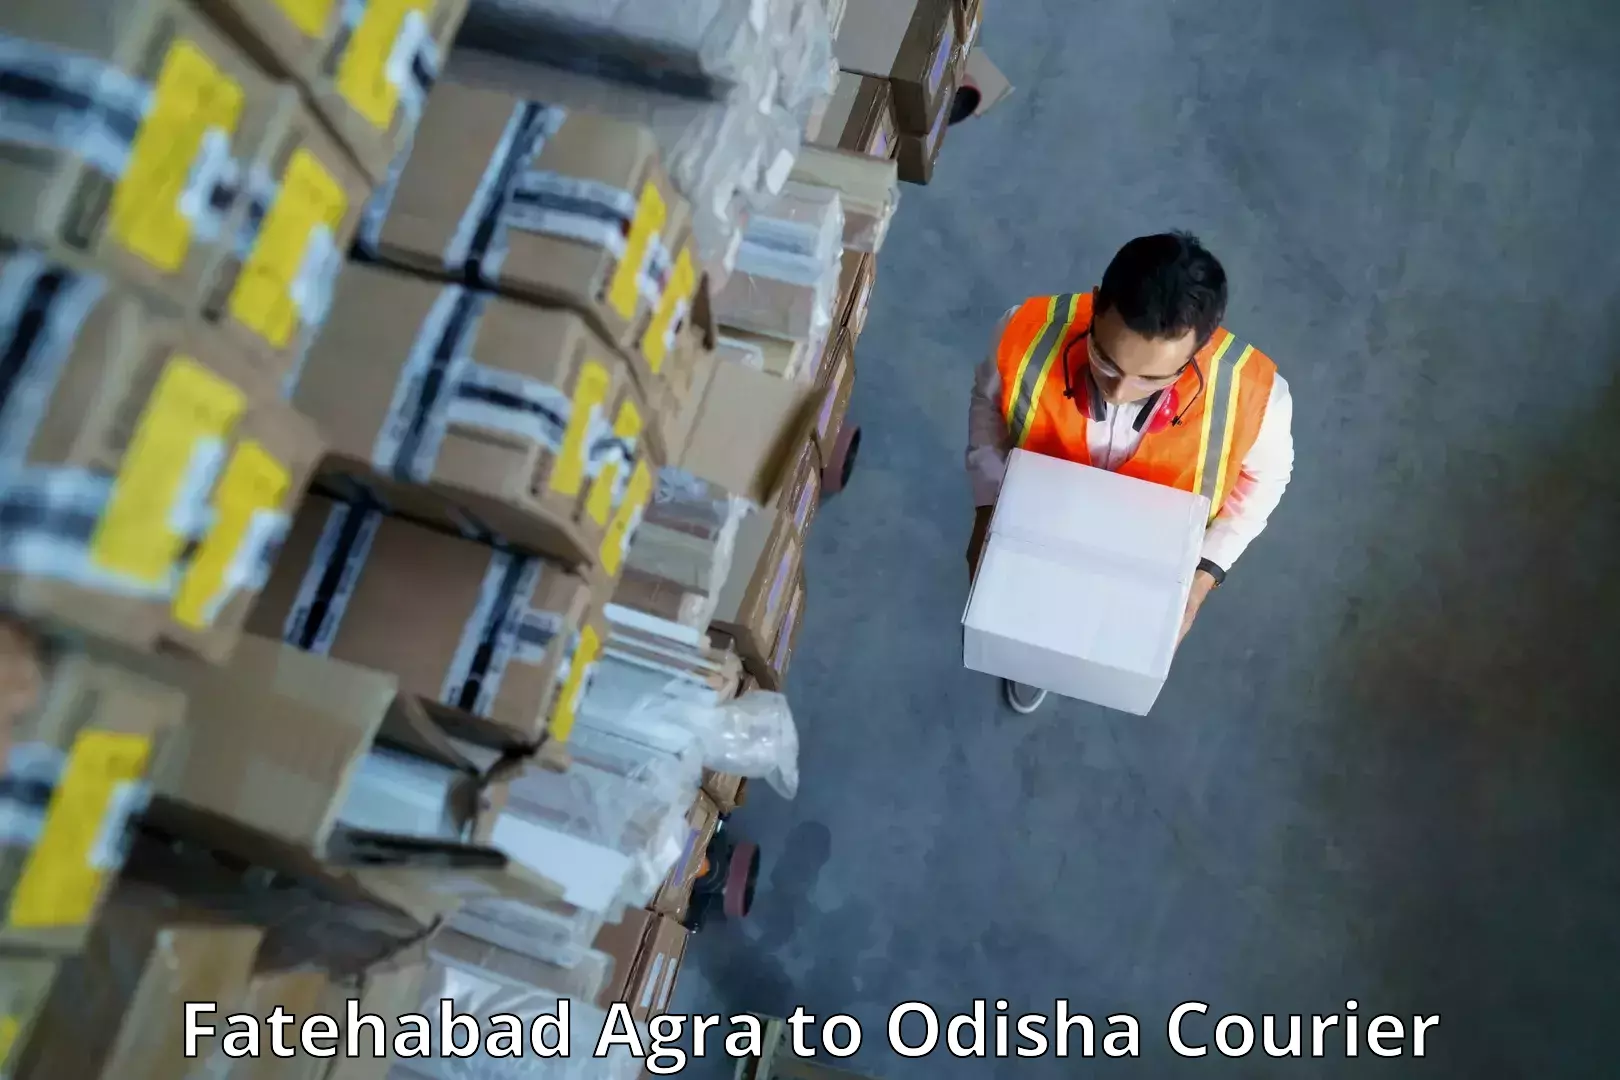 Courier service innovation Fatehabad Agra to Brajrajnagar